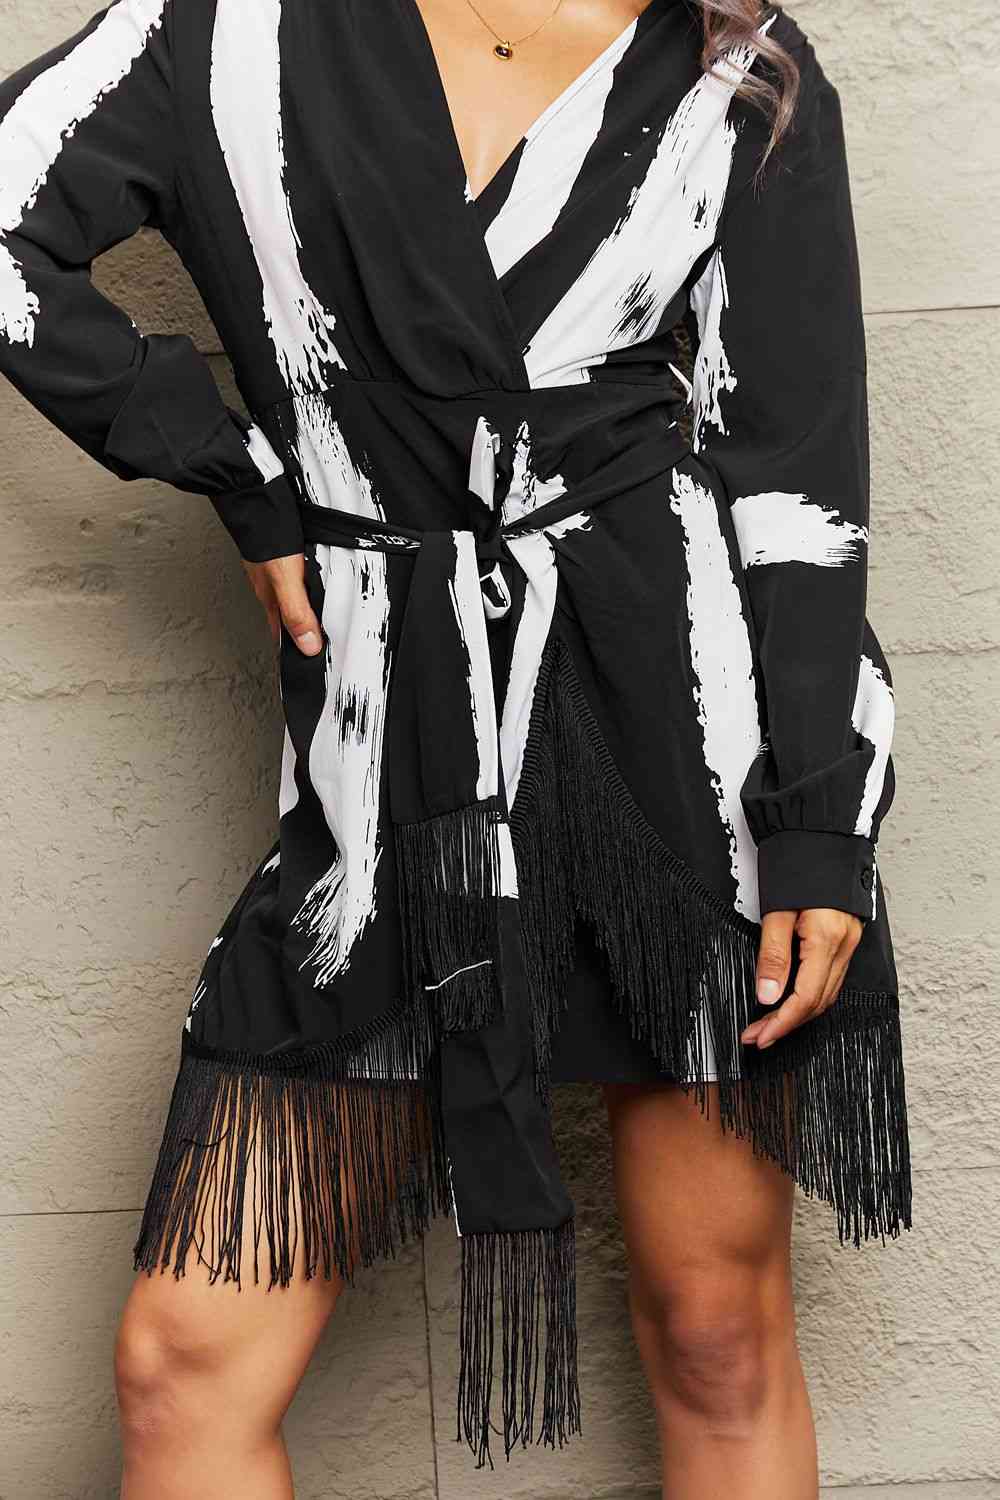 TEEK - Black and White Fringe Detail Dress DRESS TEEK Trend XS  